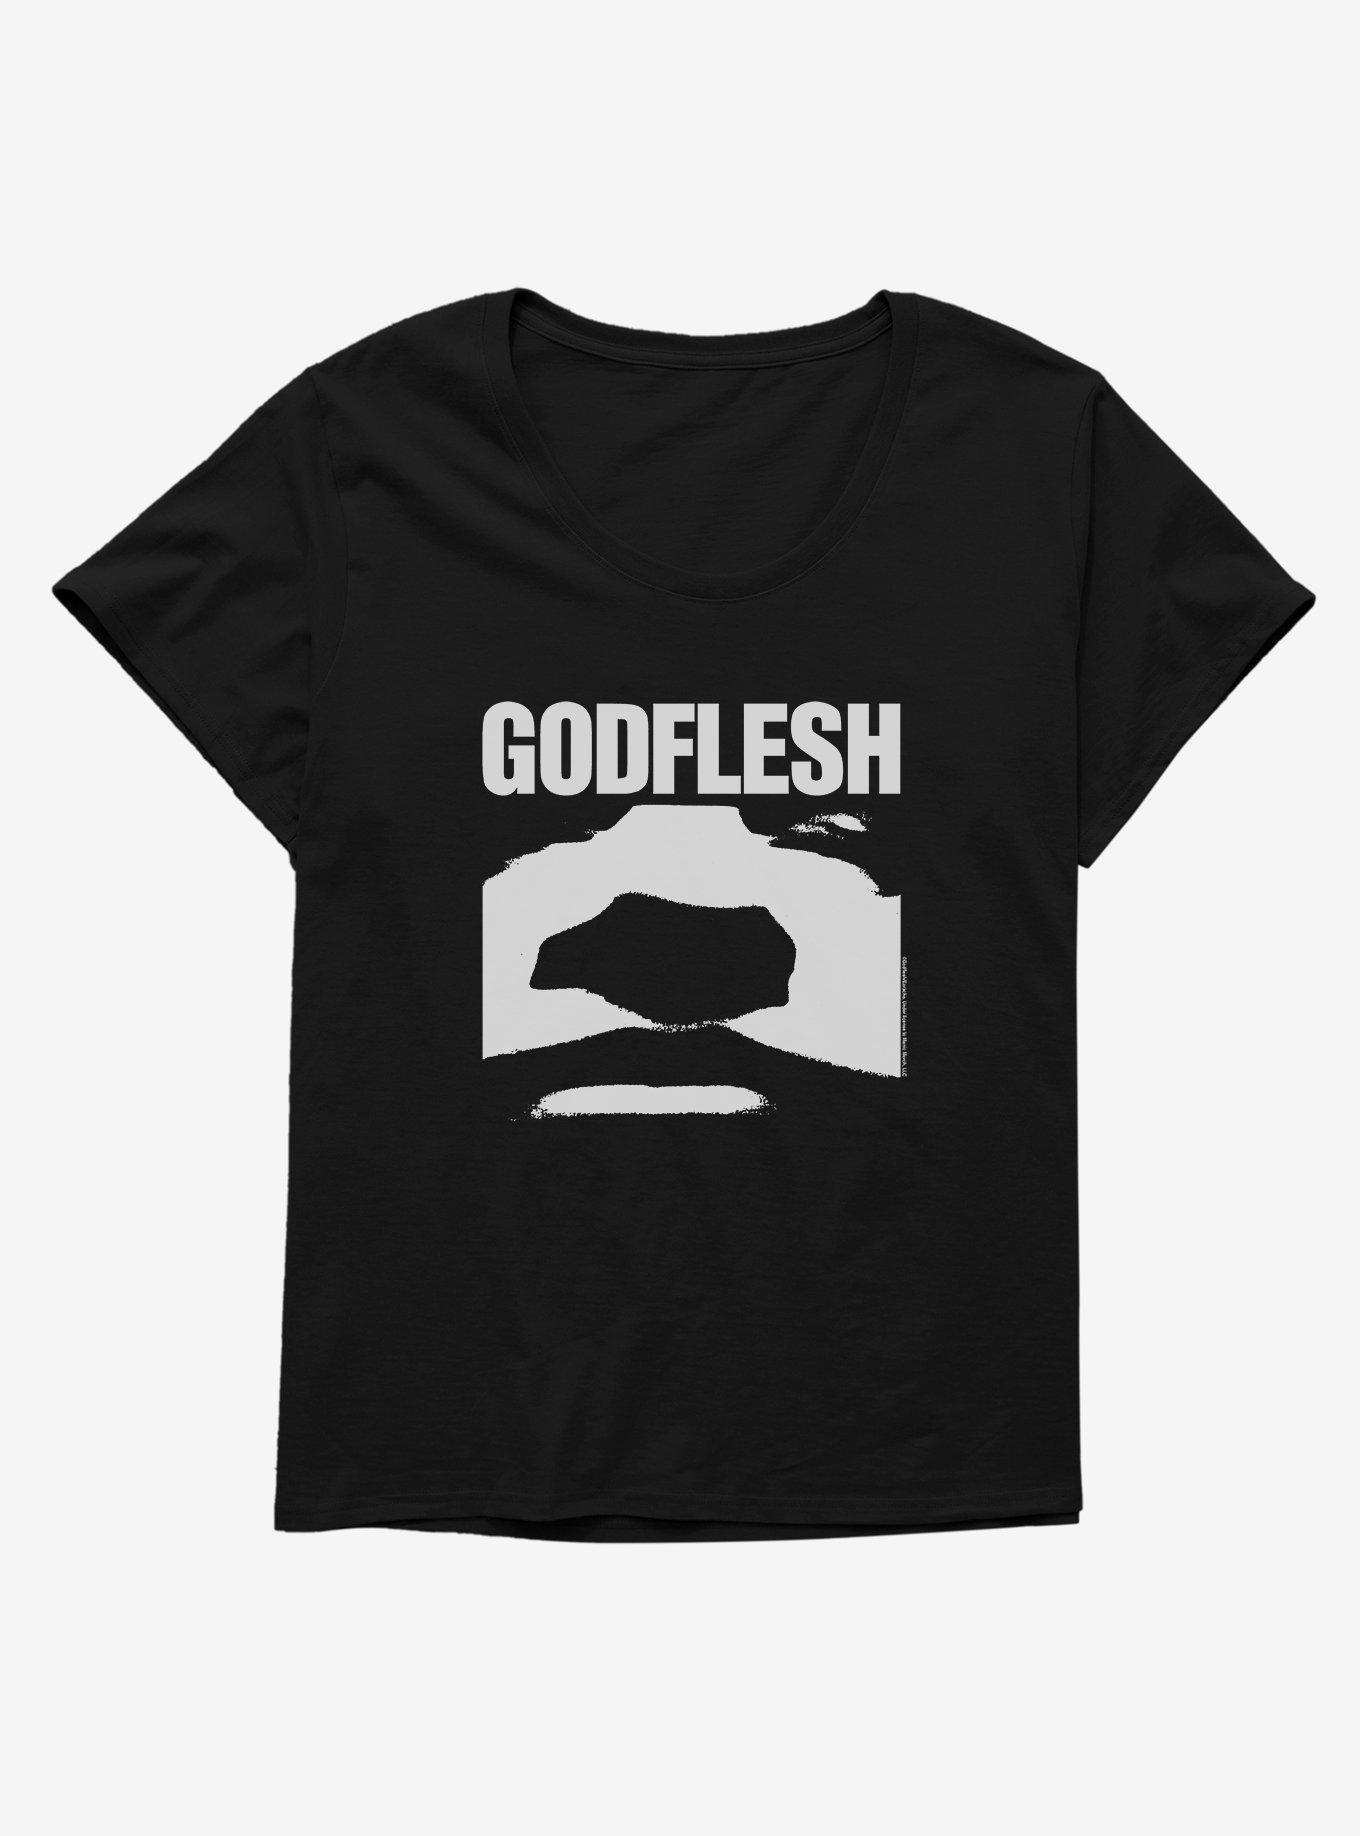 Godflesh Album Cover Girls T-Shirt Plus